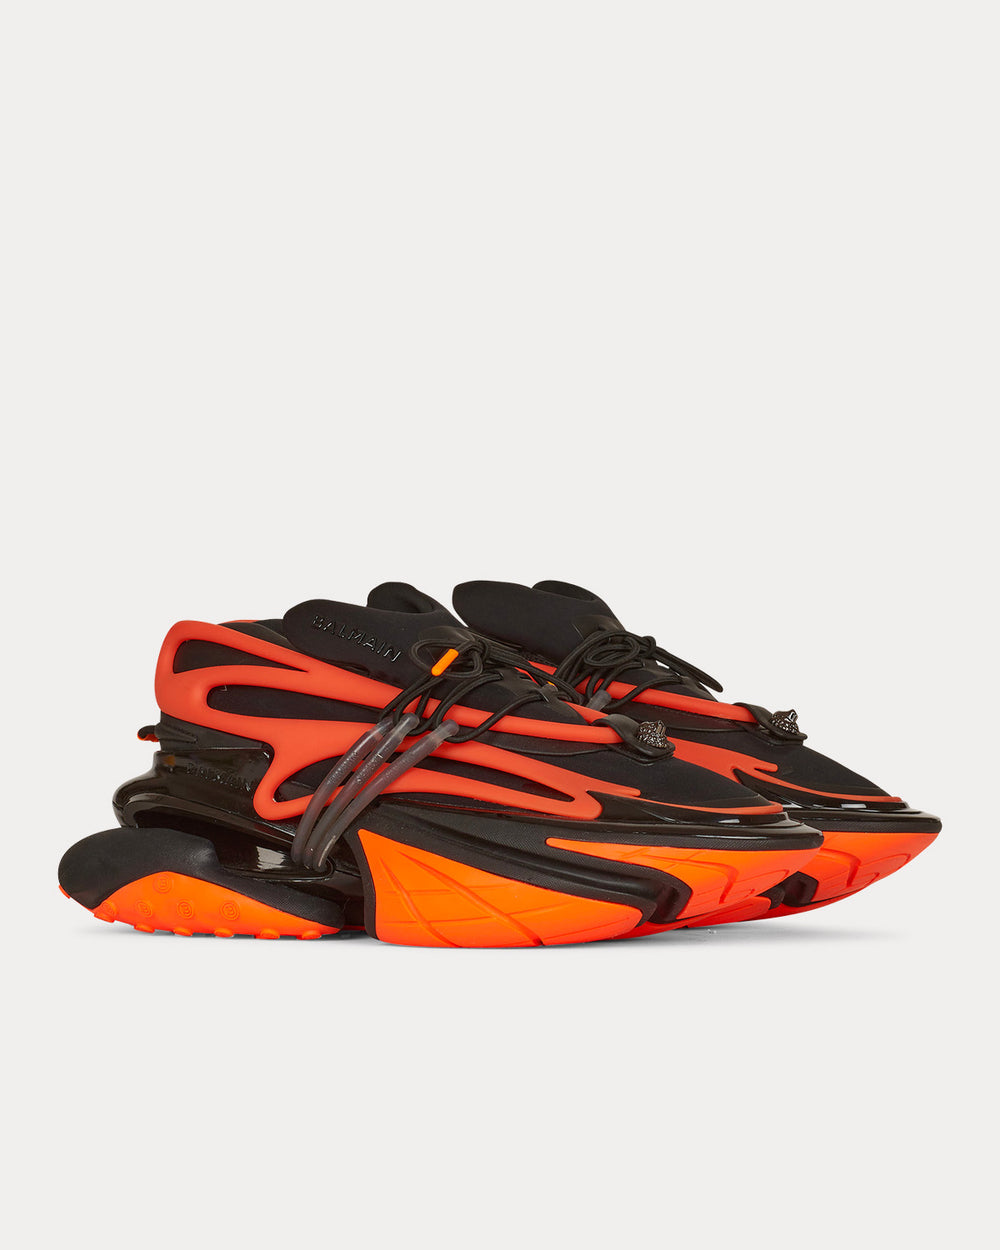 Balmain Unicorn Orange Low Top Sneakers - Sneak in Peace